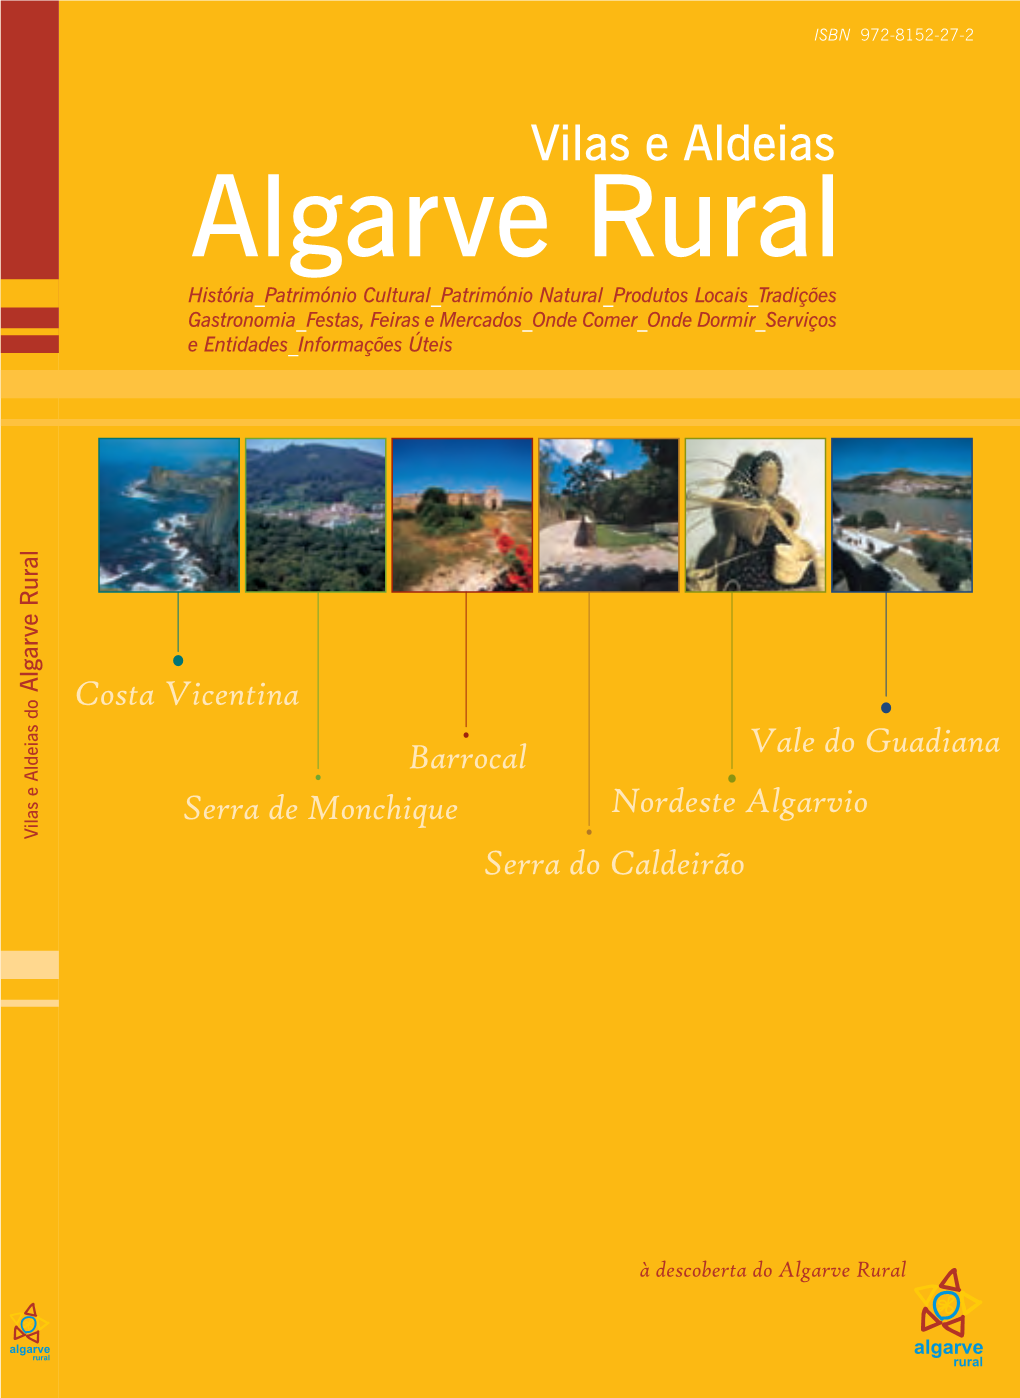 Towns and Villages | Rural Algarve (PDF)